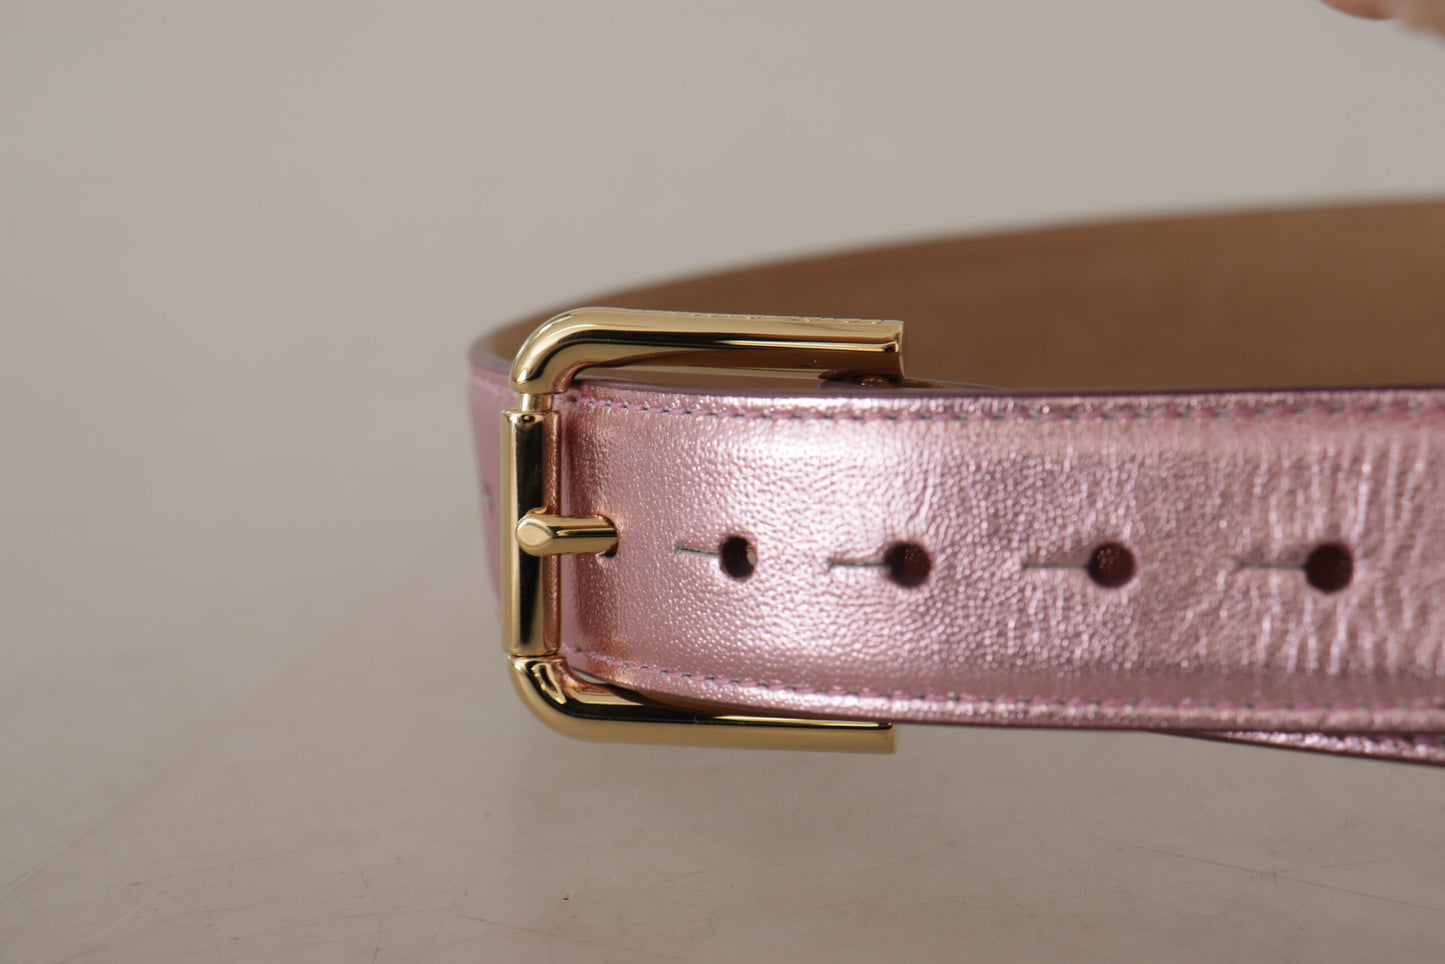 Elegant Metallic Pink Leather Belt